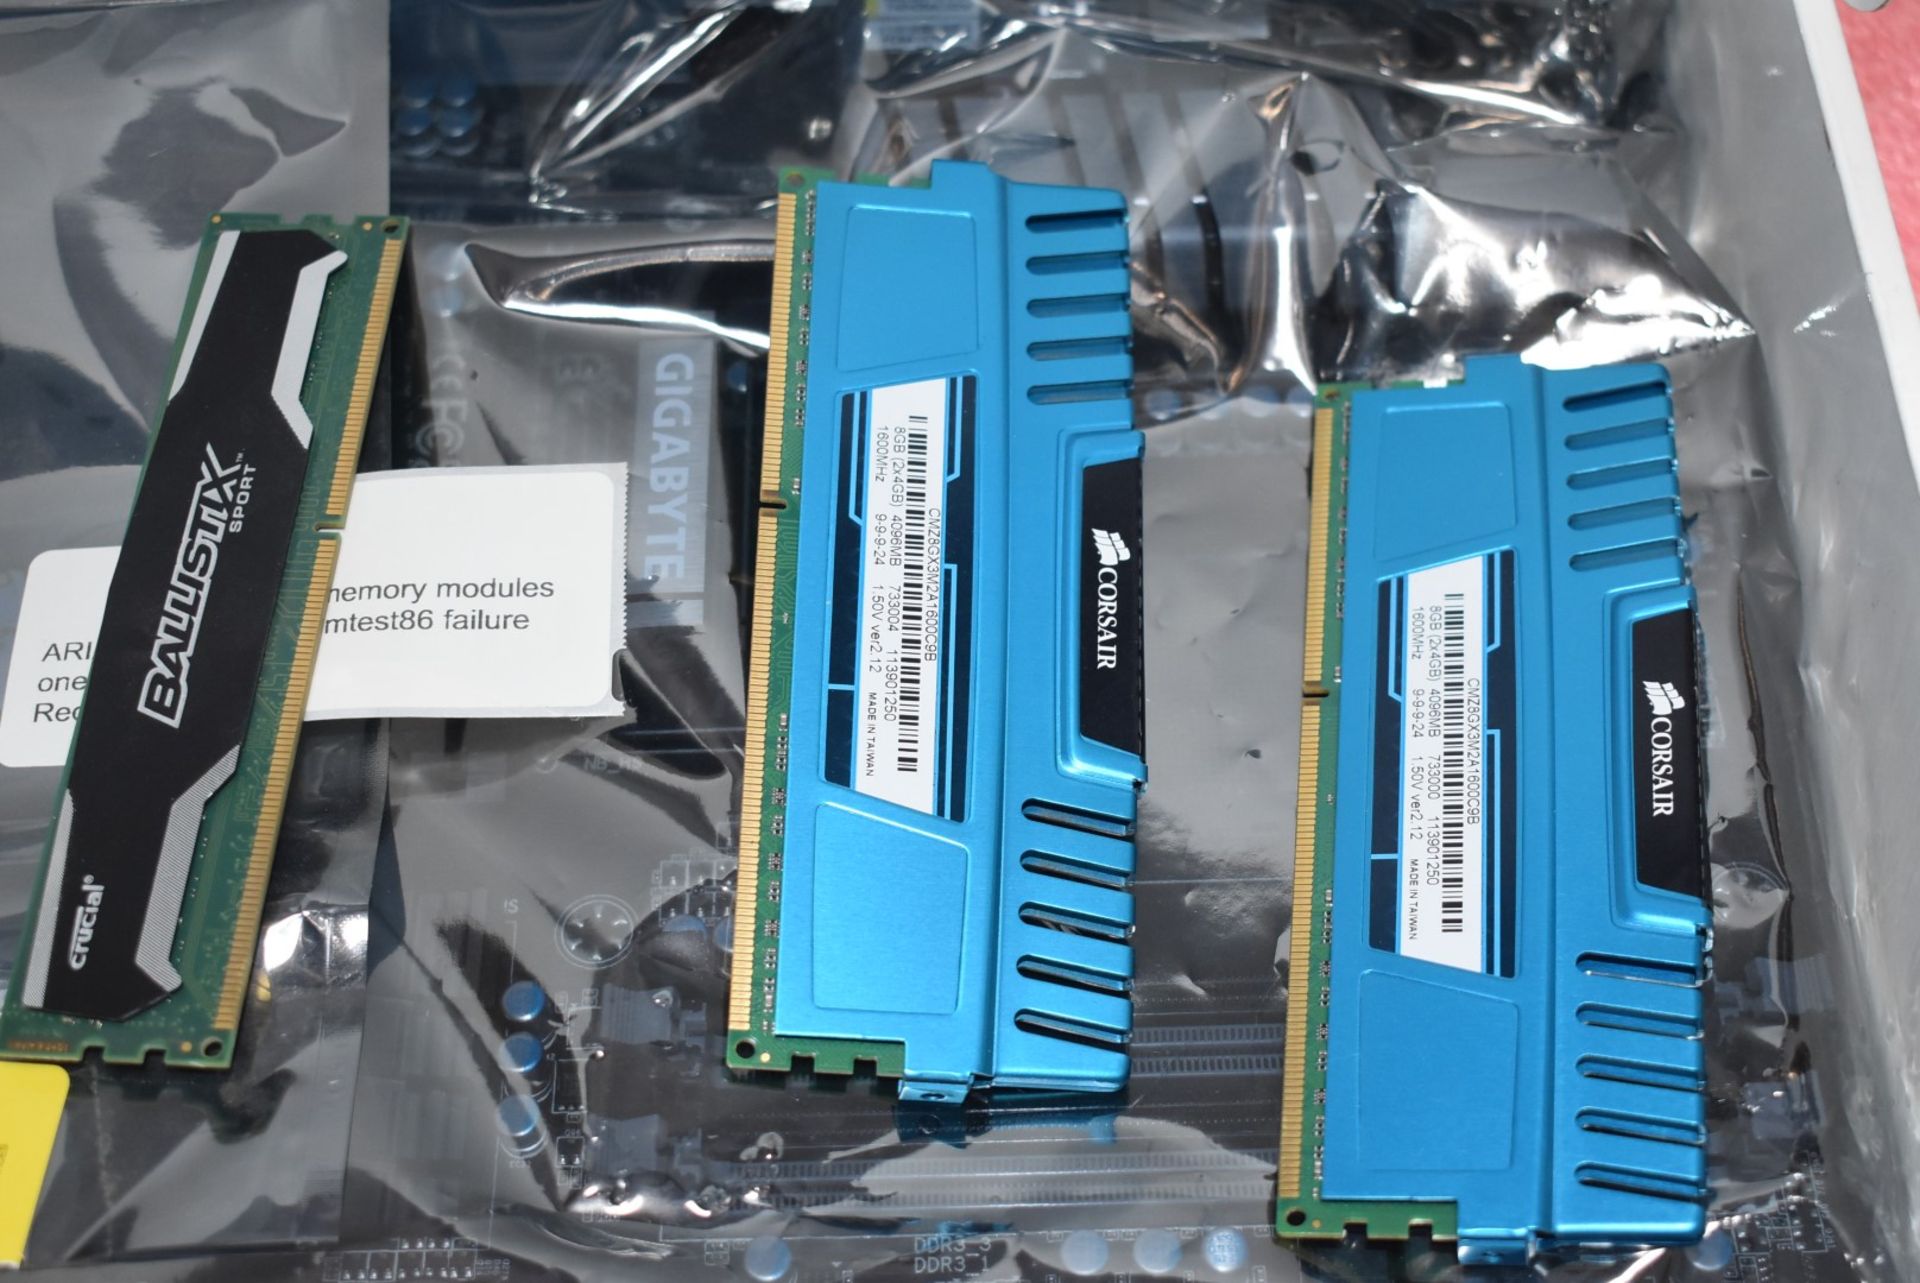 1 x Gigabyte GA-990FXA-UD3 AM3+ Motherboard With 8GB Ram - Includes Original Box - Image 5 of 7